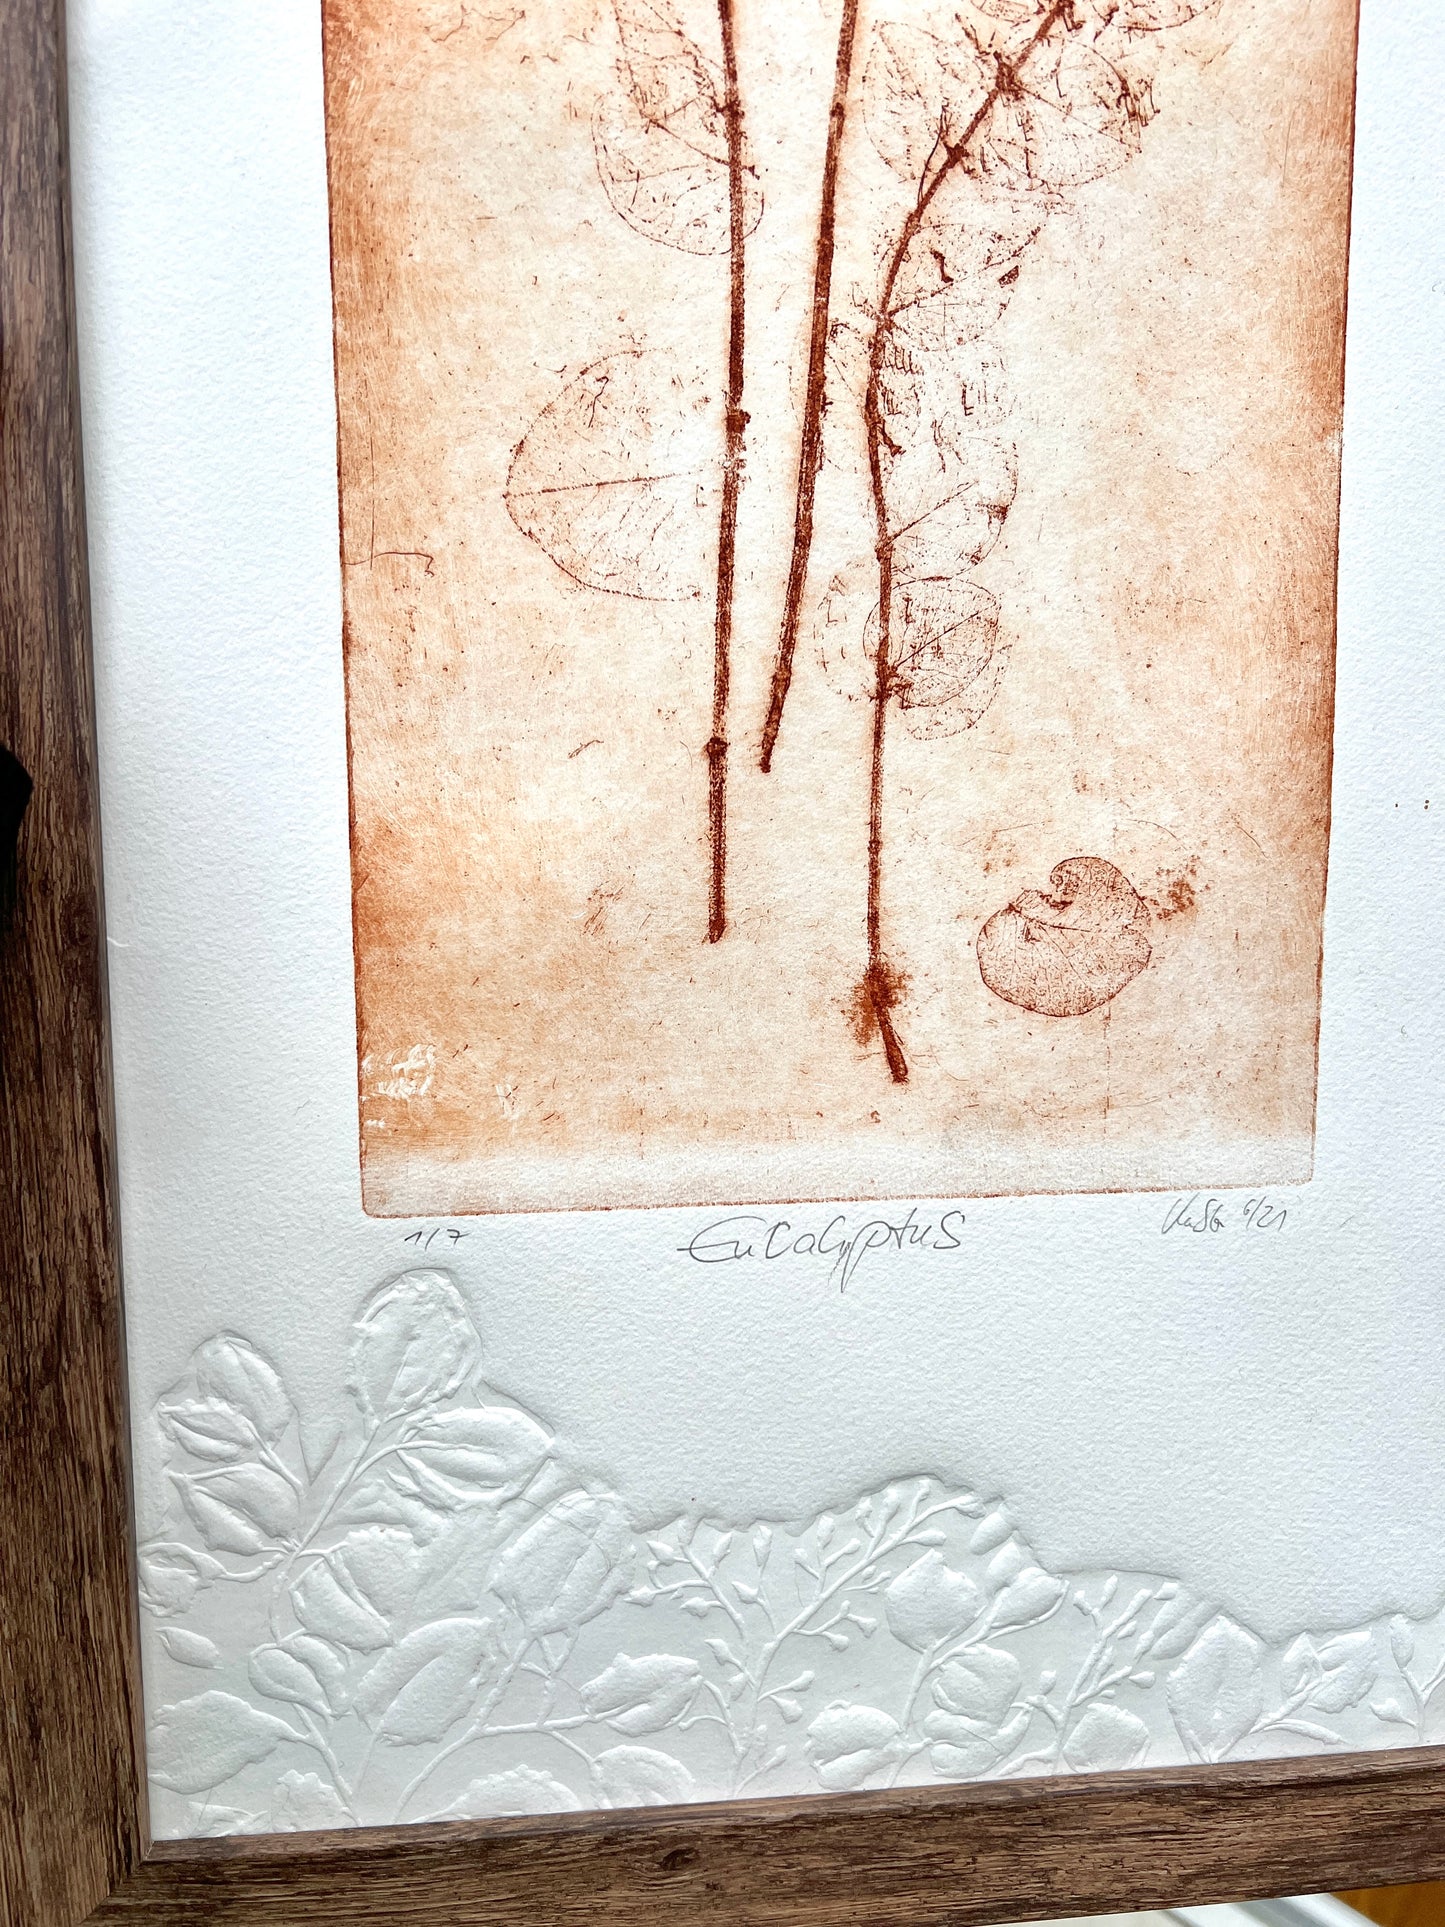 EUKALYPTUS Originaldruckgrafik Radierung Vernis mou mit Prägung, im Rahmen 35x75 cm